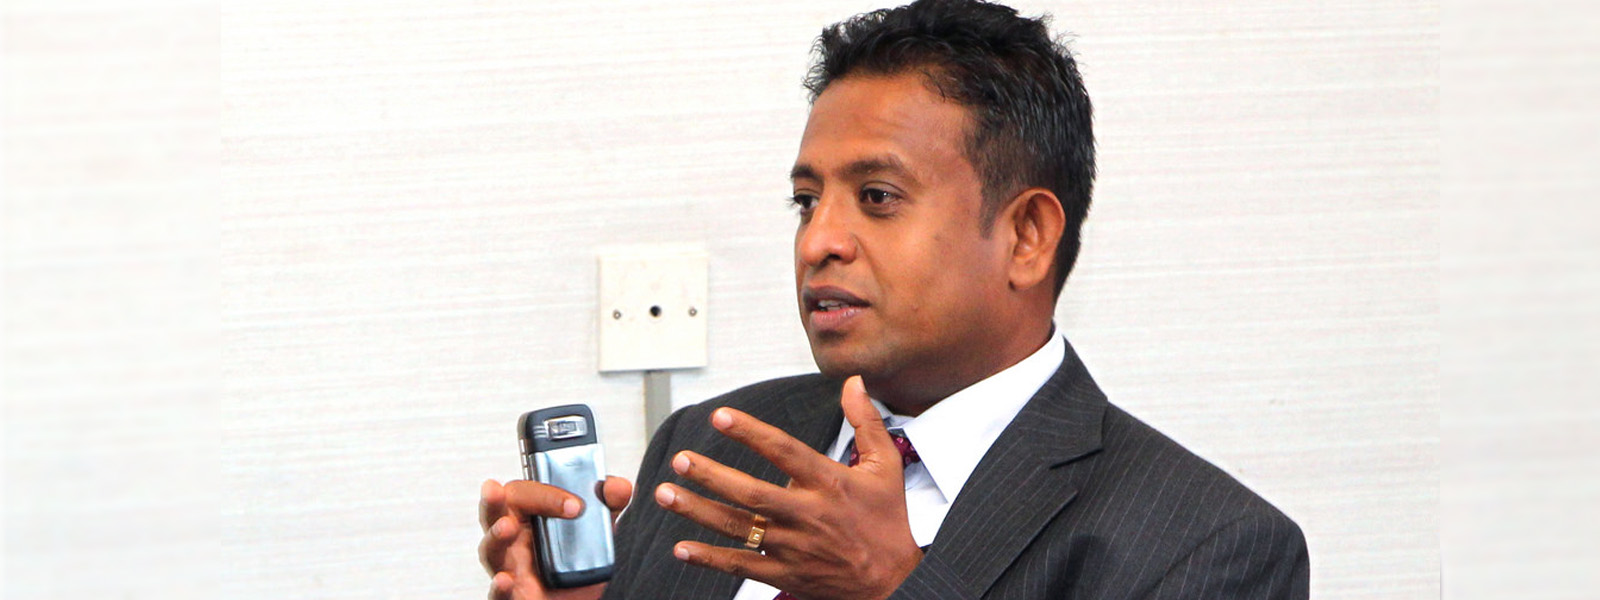 Sri Lanka did not have any financial discipline